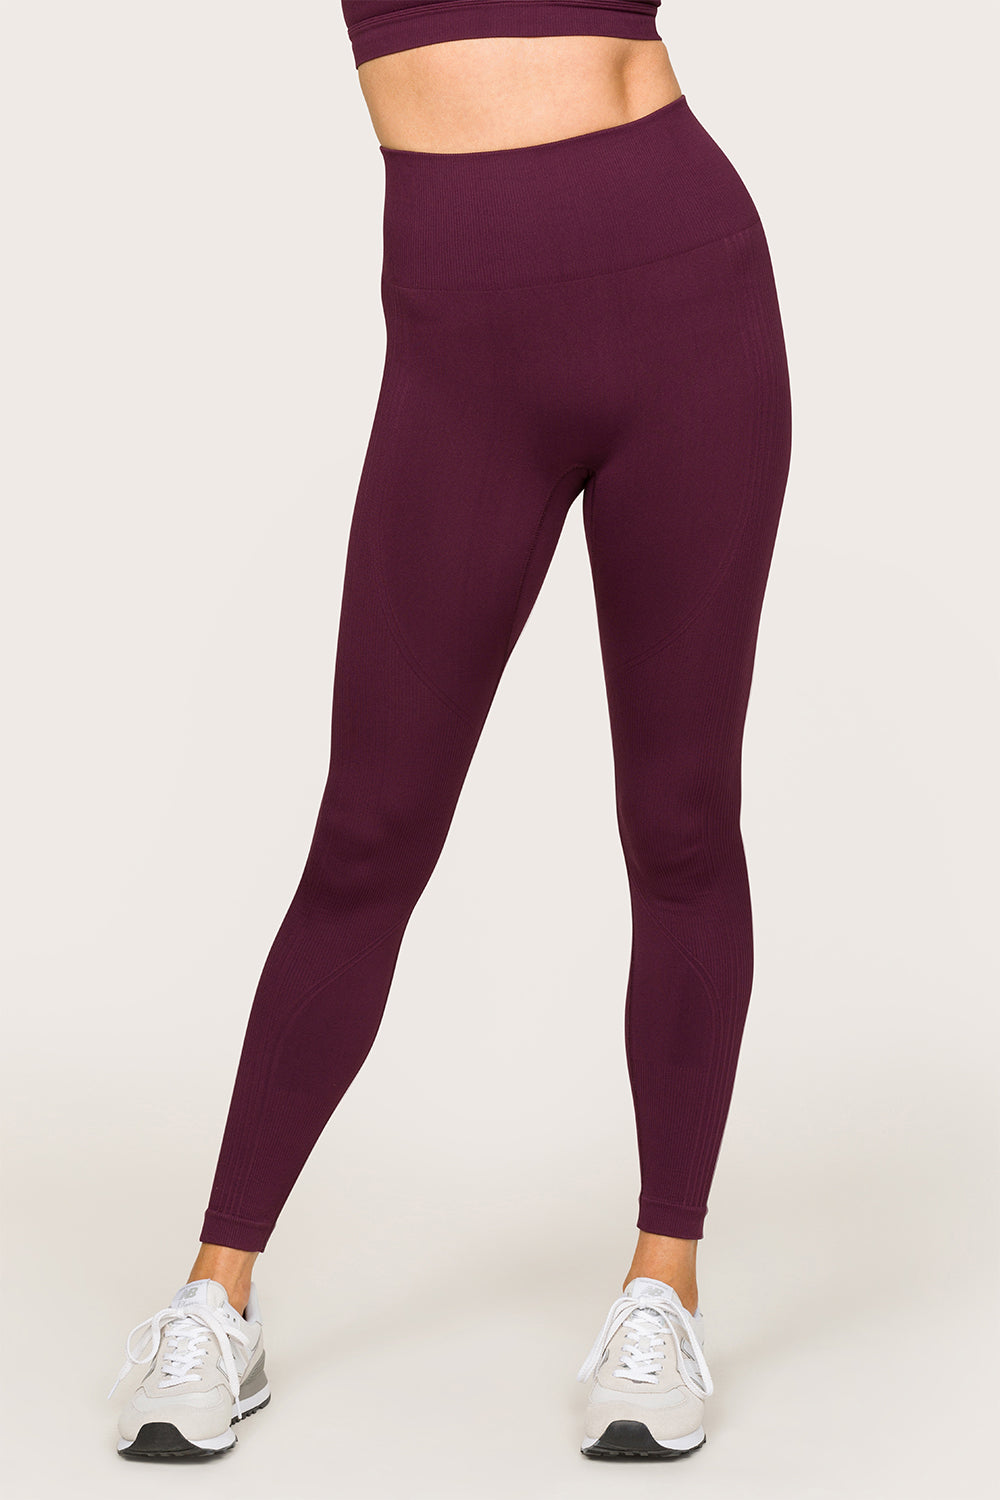 Alala women's seamless leggings in dark purple